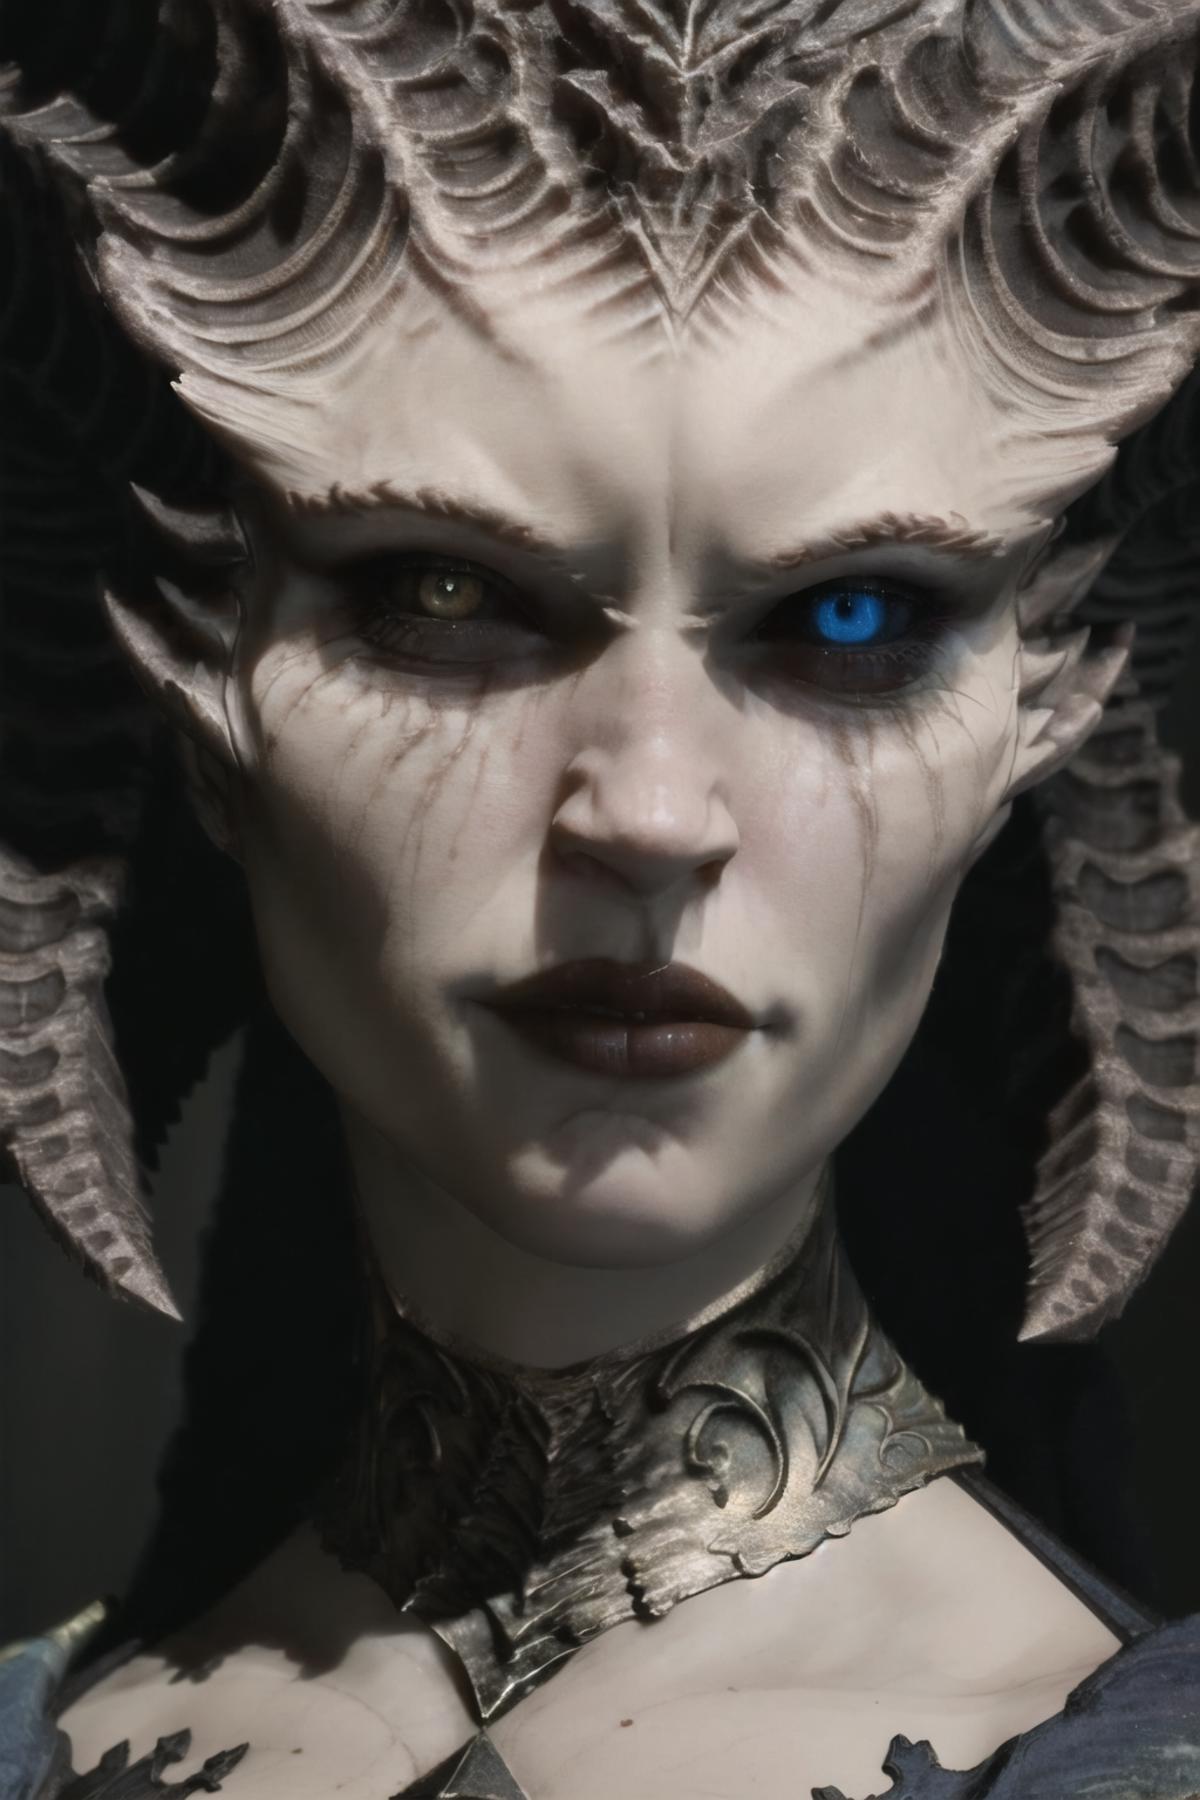 Lilith - Diablo 4 image by MidFR